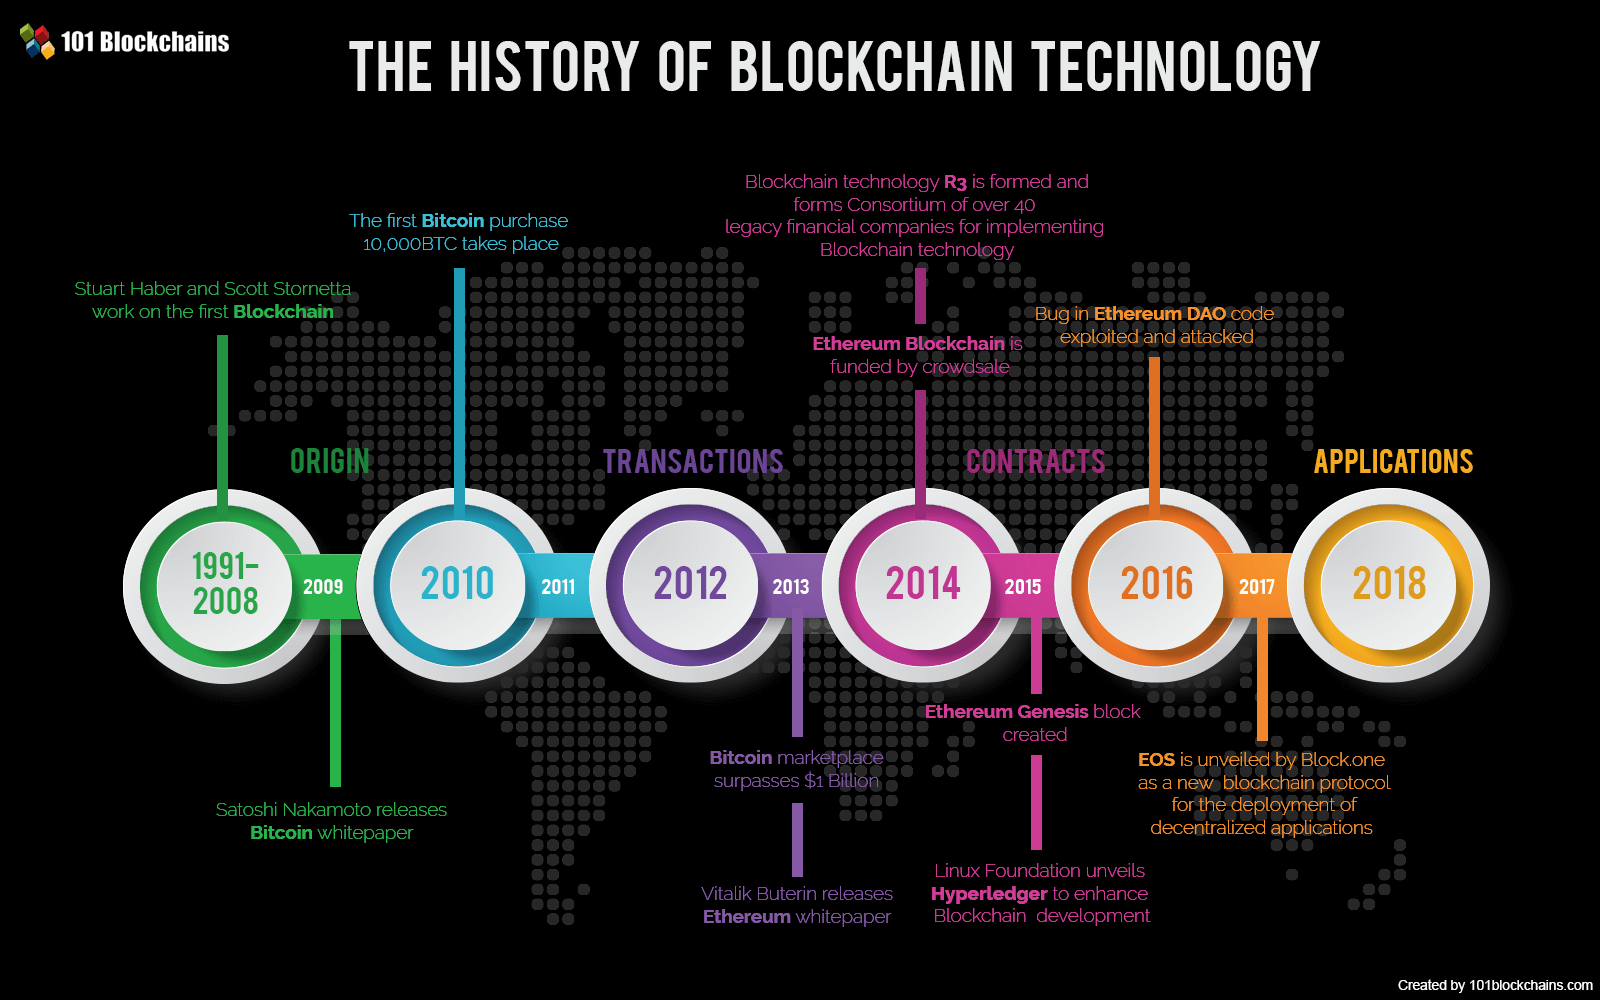 History of Blockchain Technology